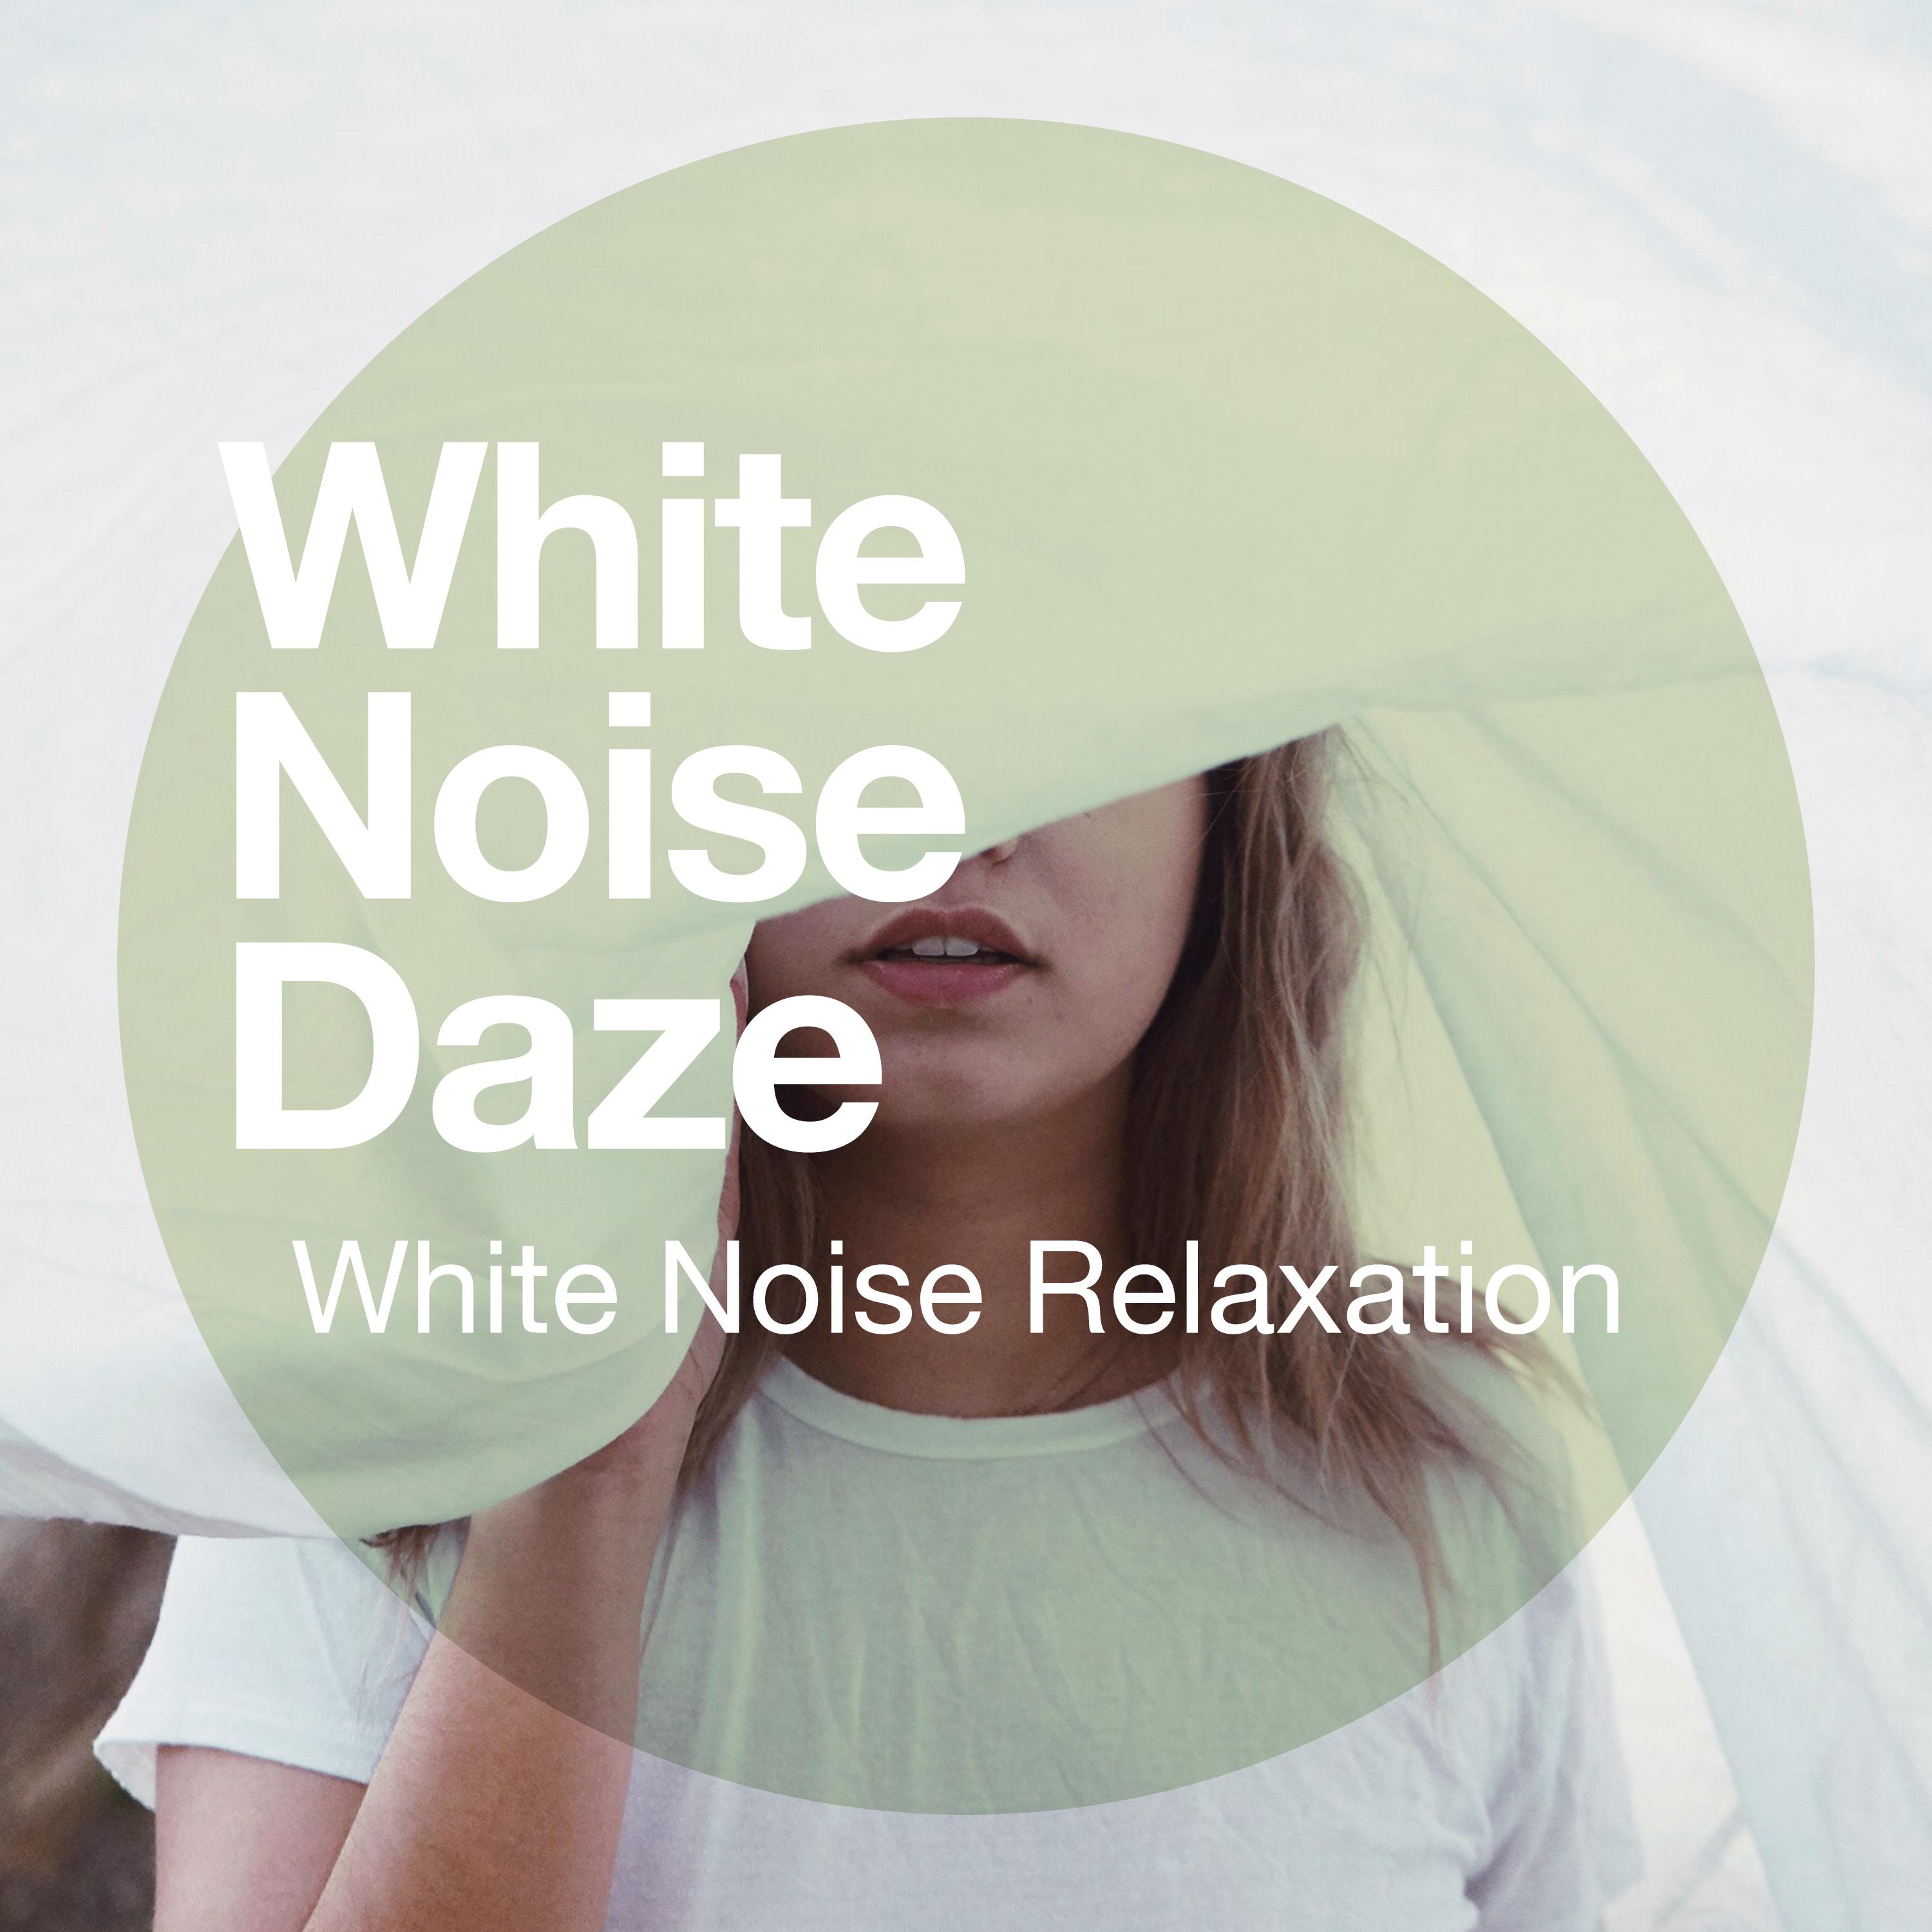 White Noise Daze